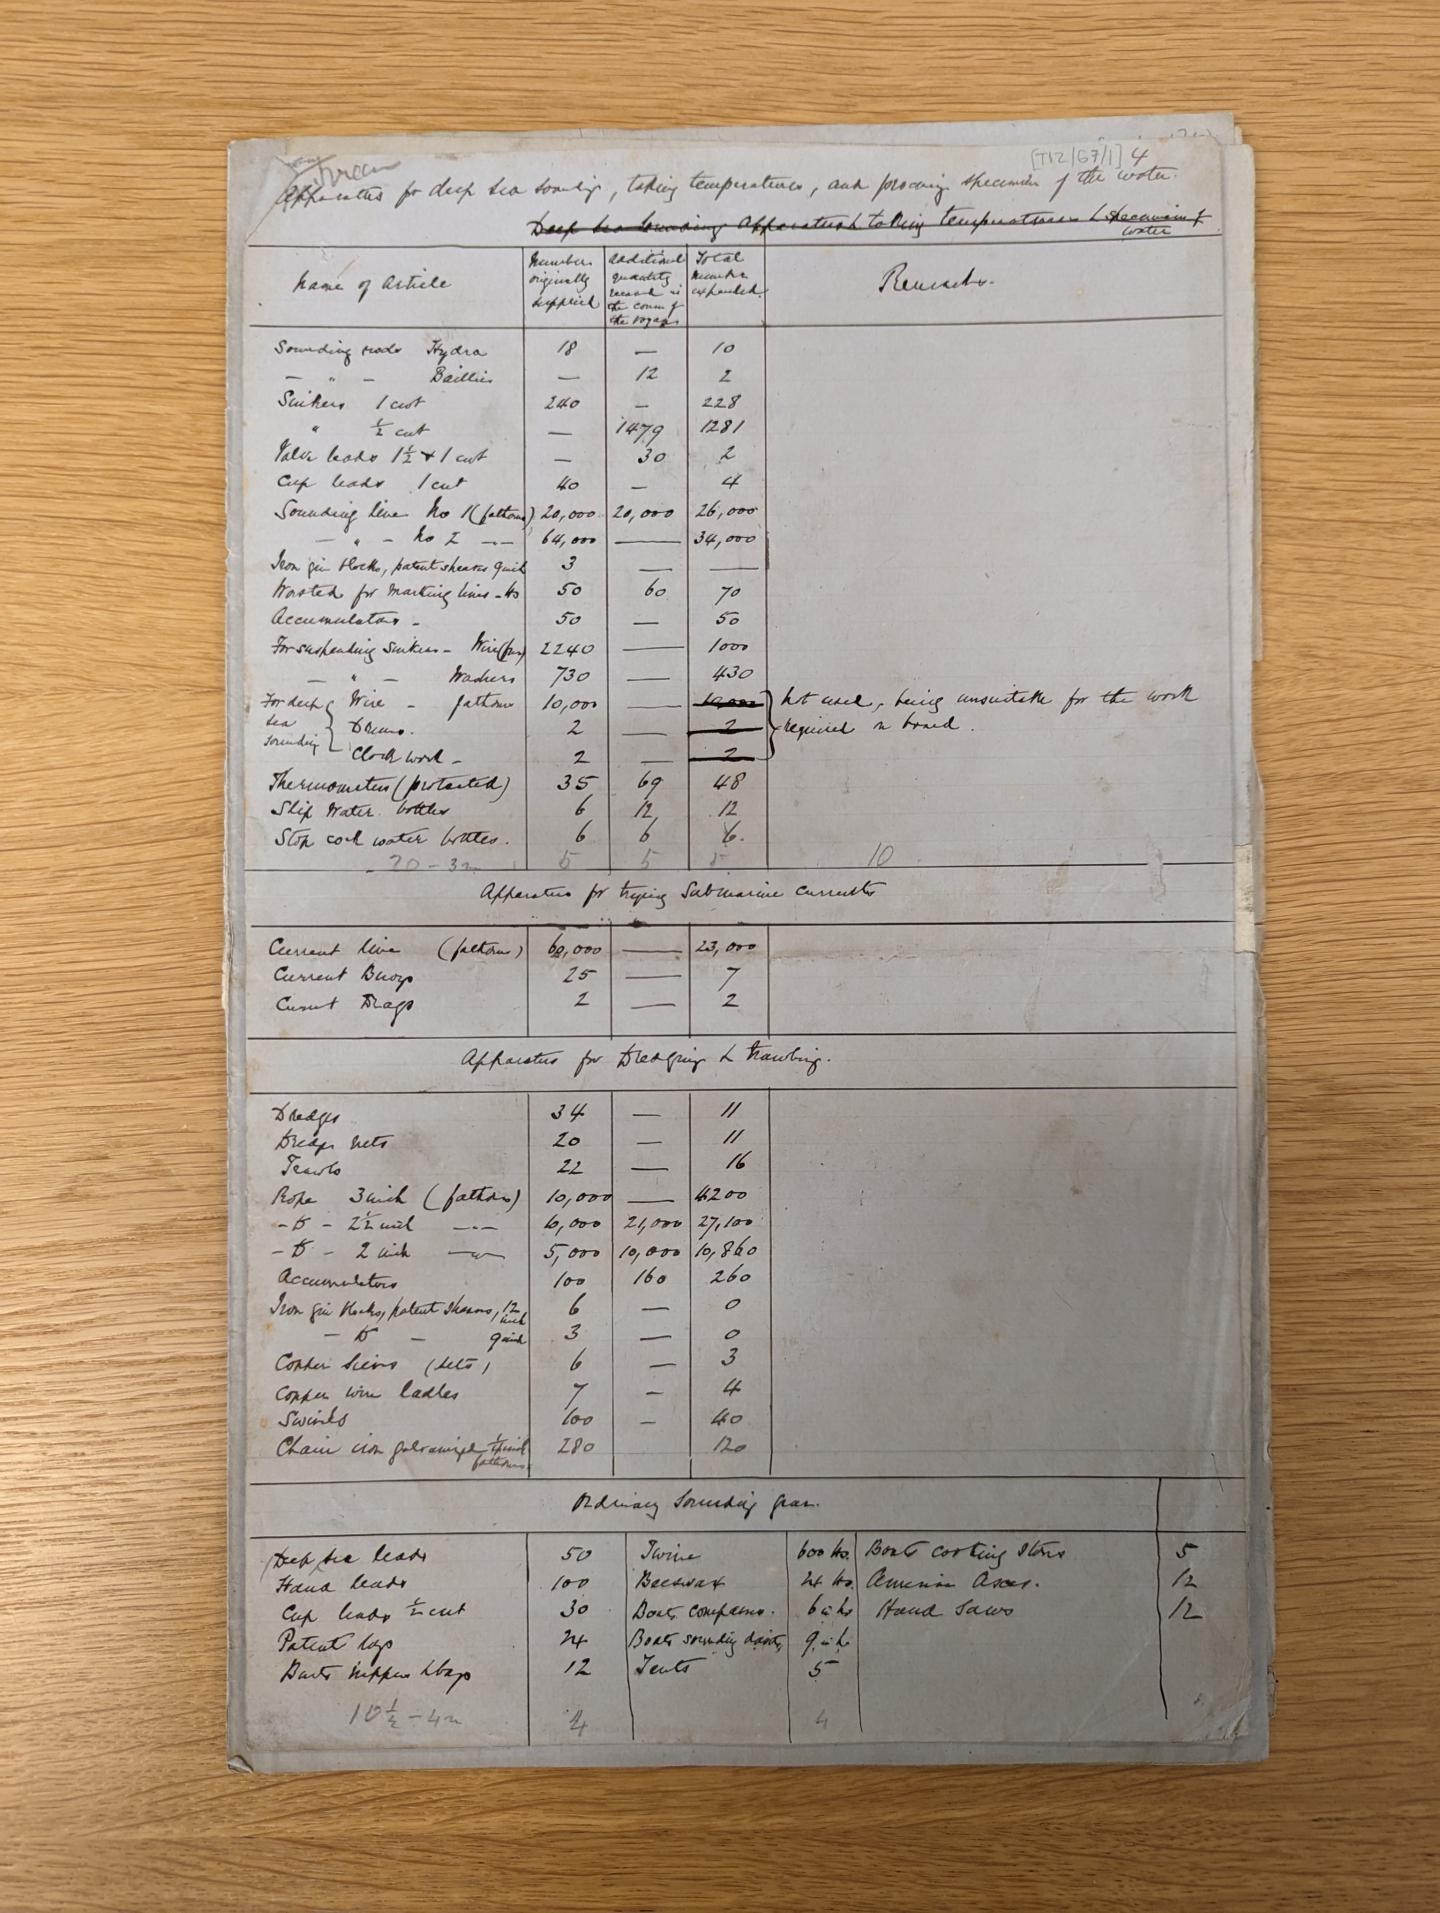 Manuscript of Tizard's Challenger narrative featuring various columns and annotations